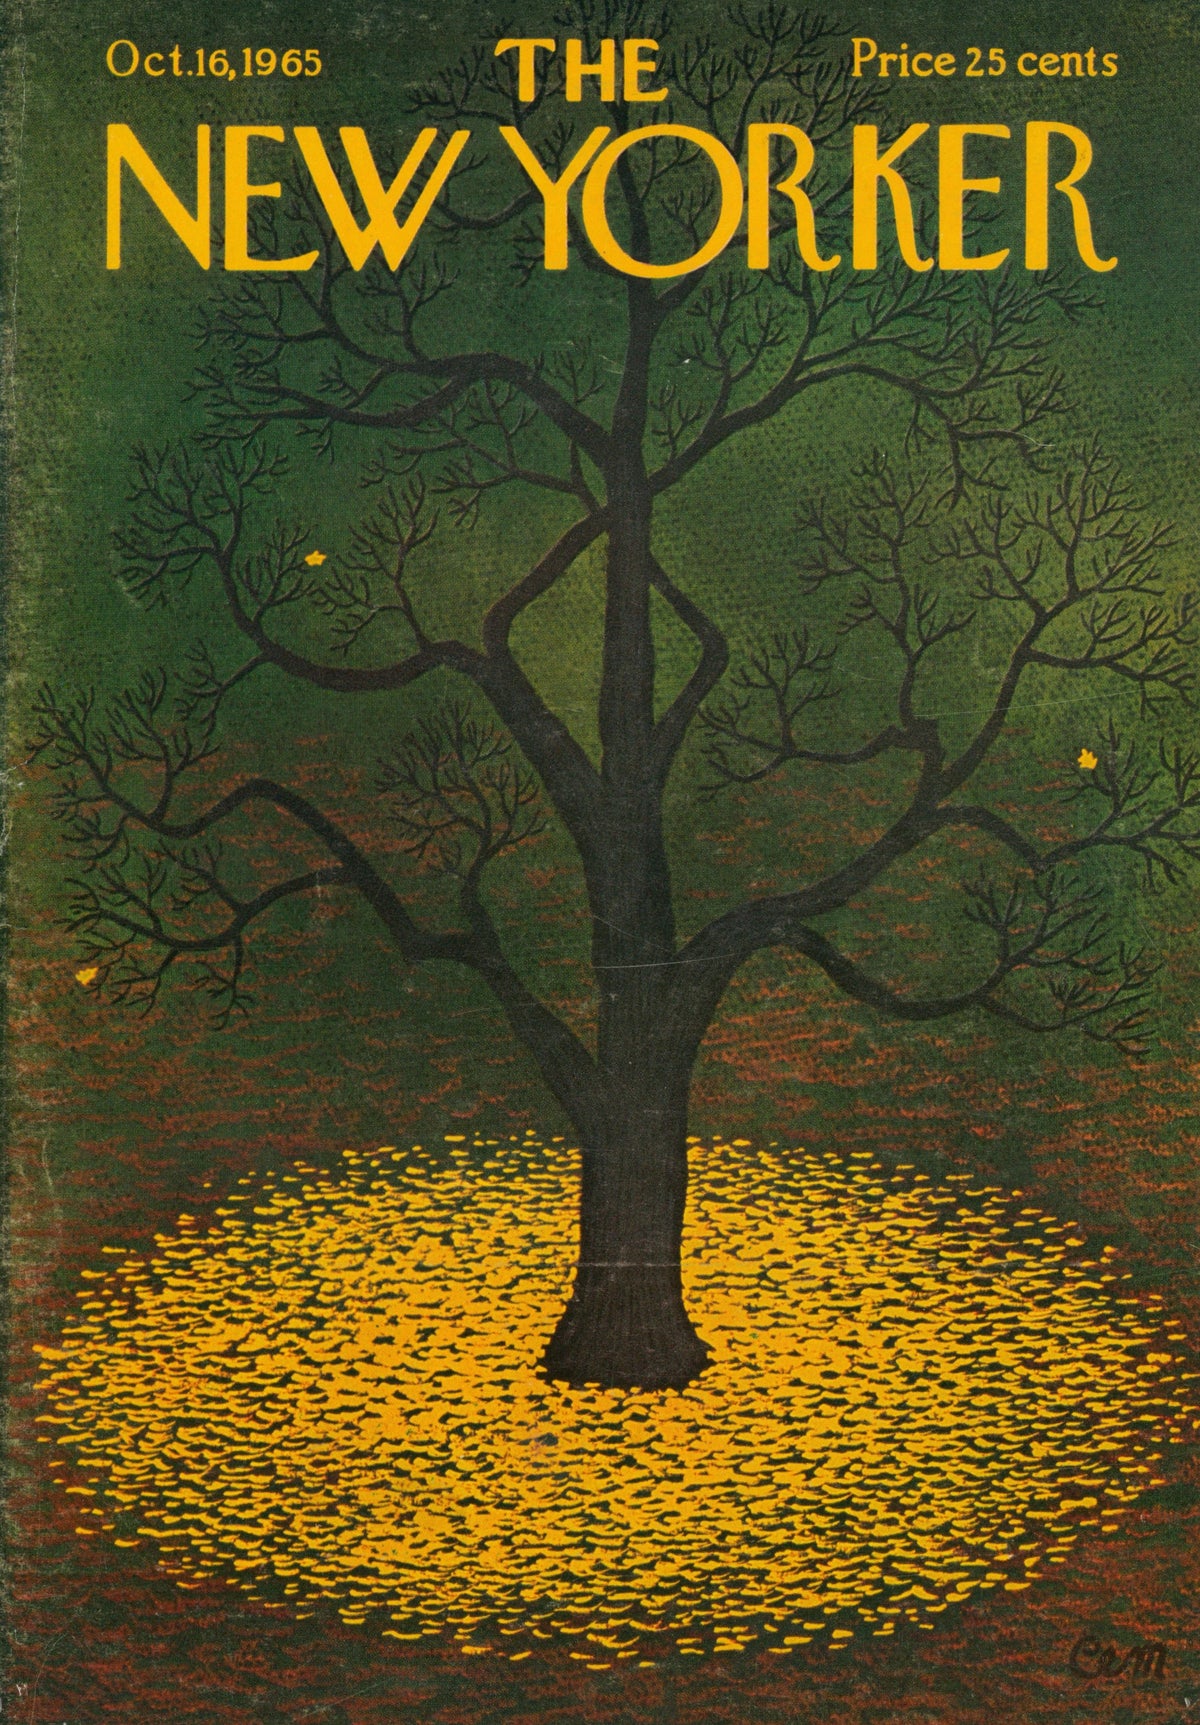 Autumn Gold-The New Yorker - Authentic Vintage Antique Print